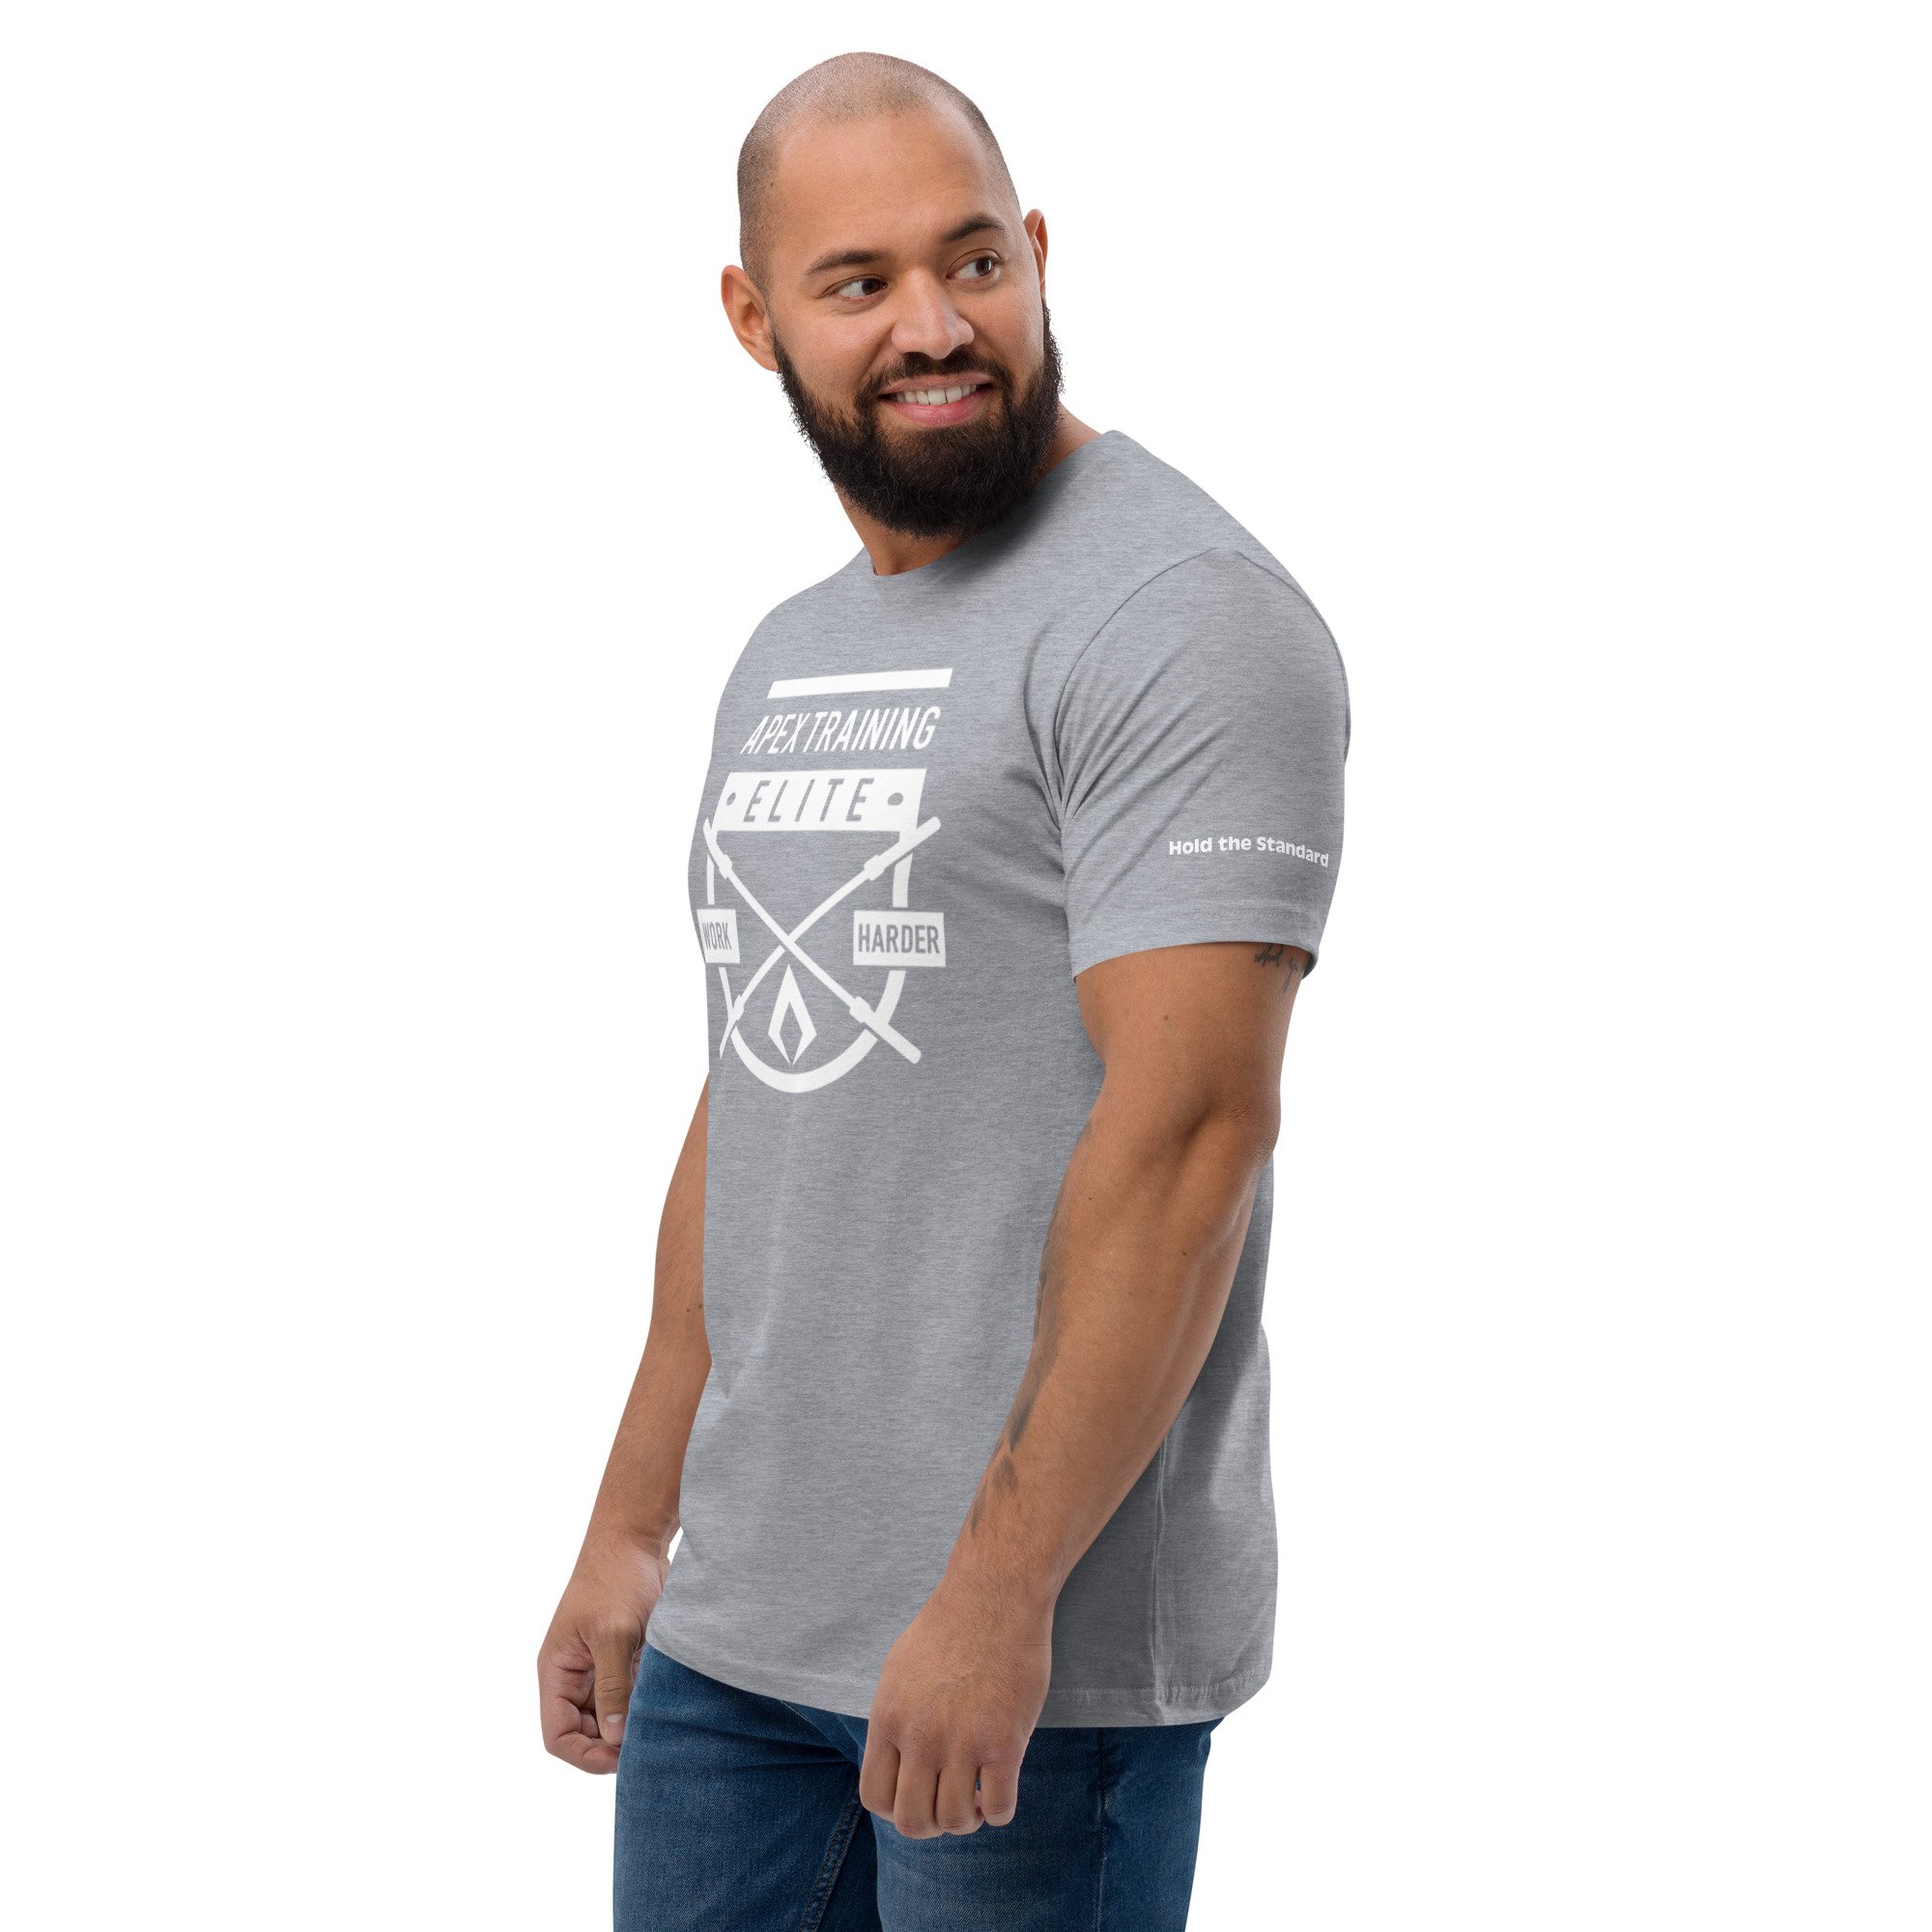 Apex Elite Next Level T-shirt — The Apex Training Gym